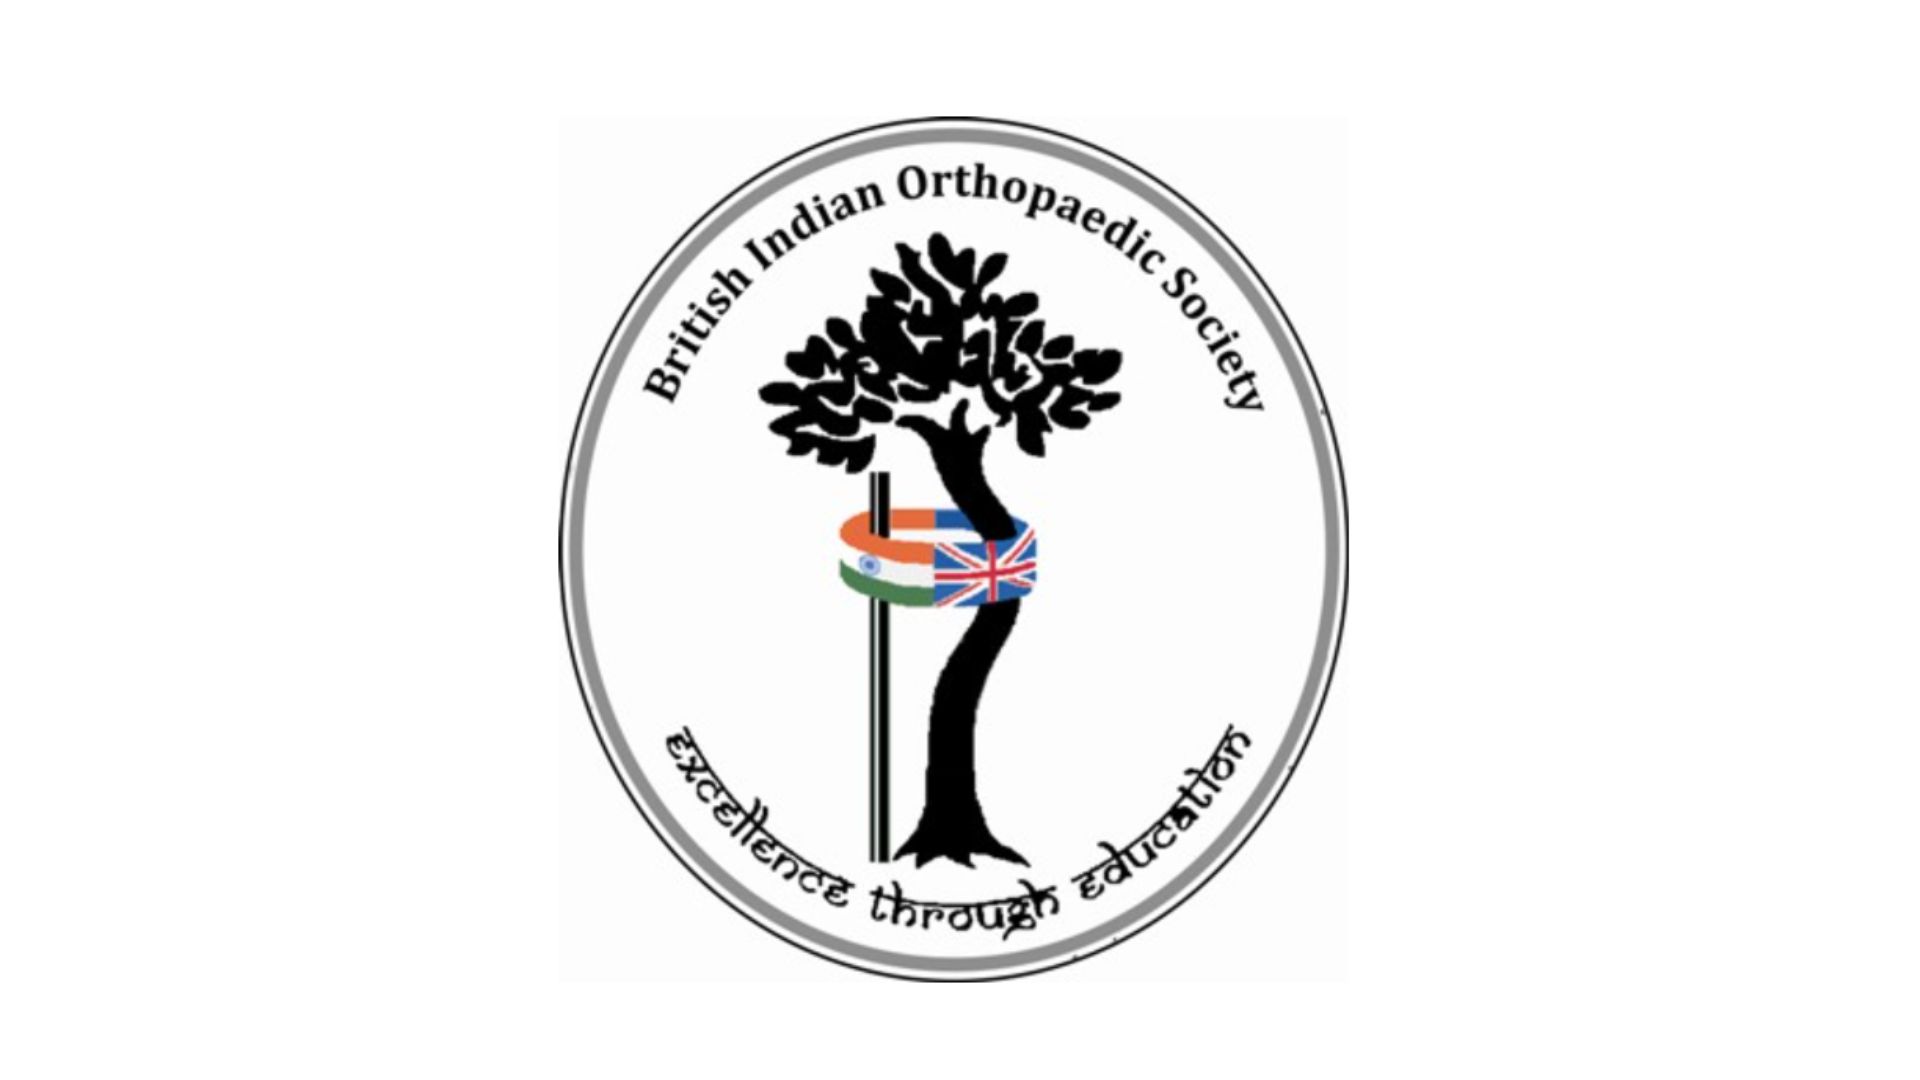 British Indian Orthopaedic Association